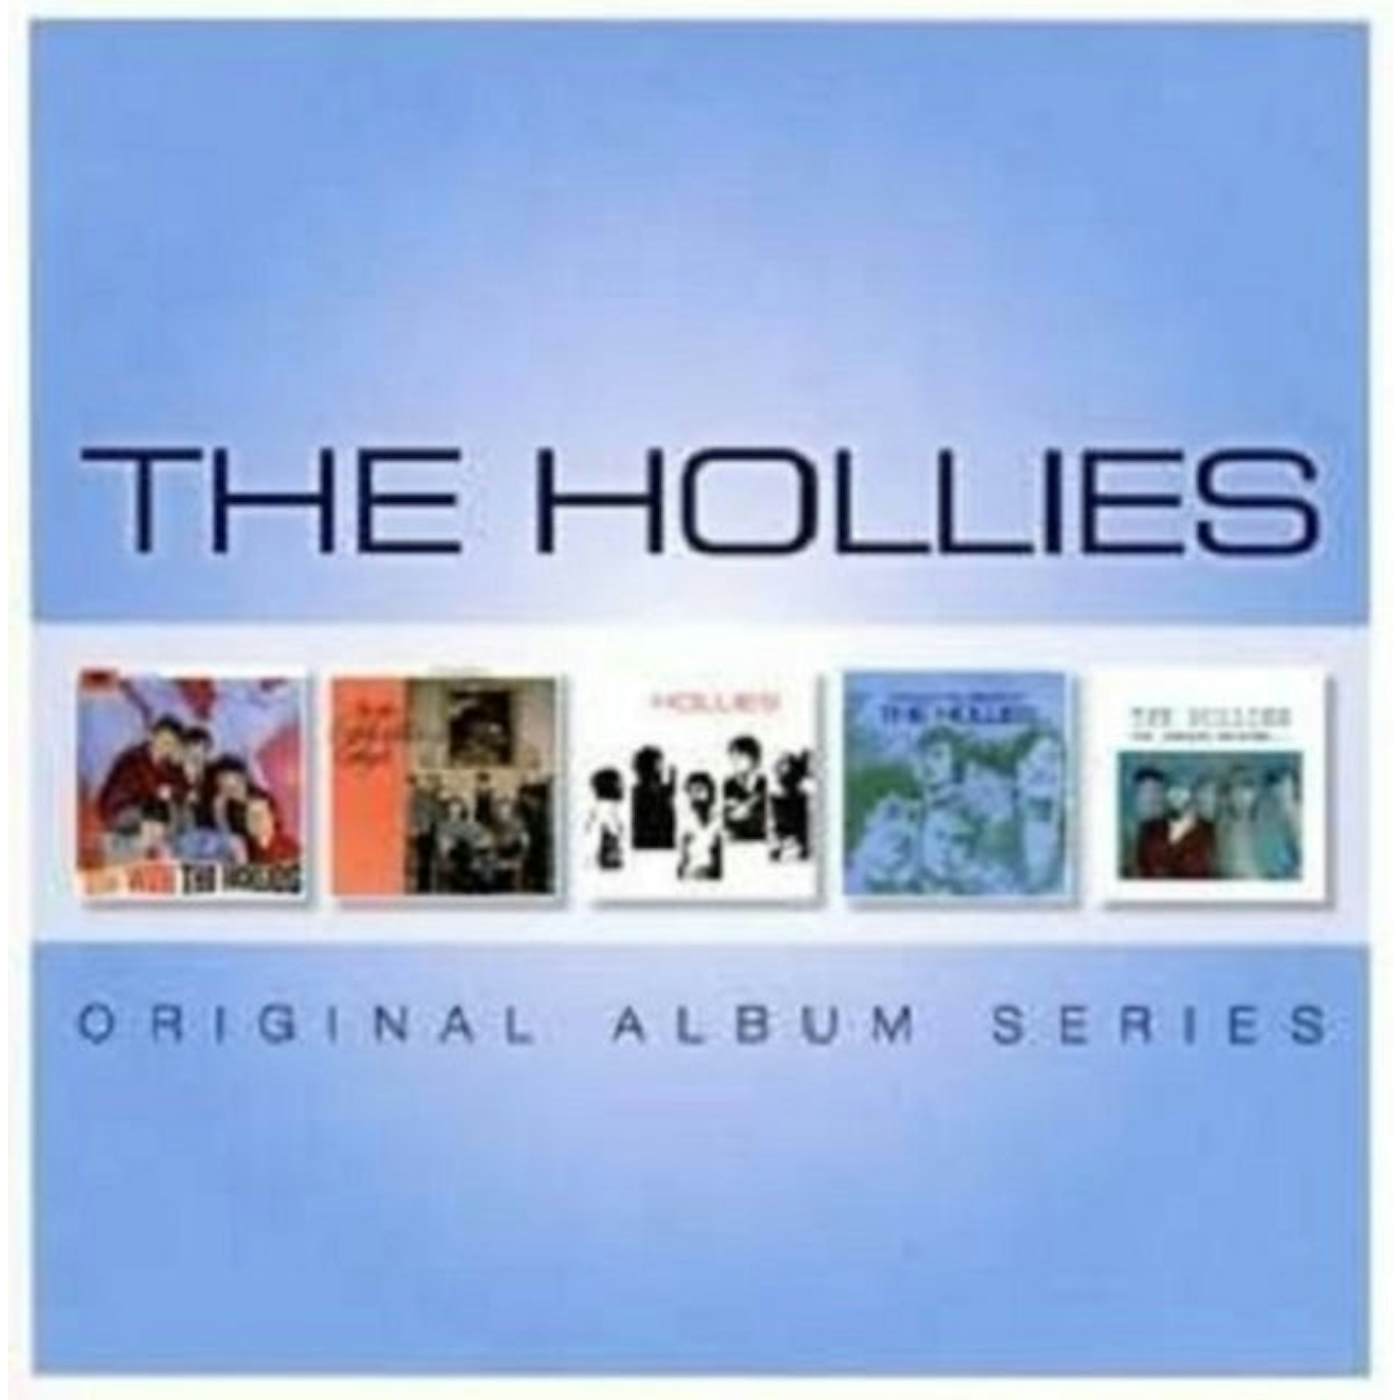 The Hollies CD - Original Album Series